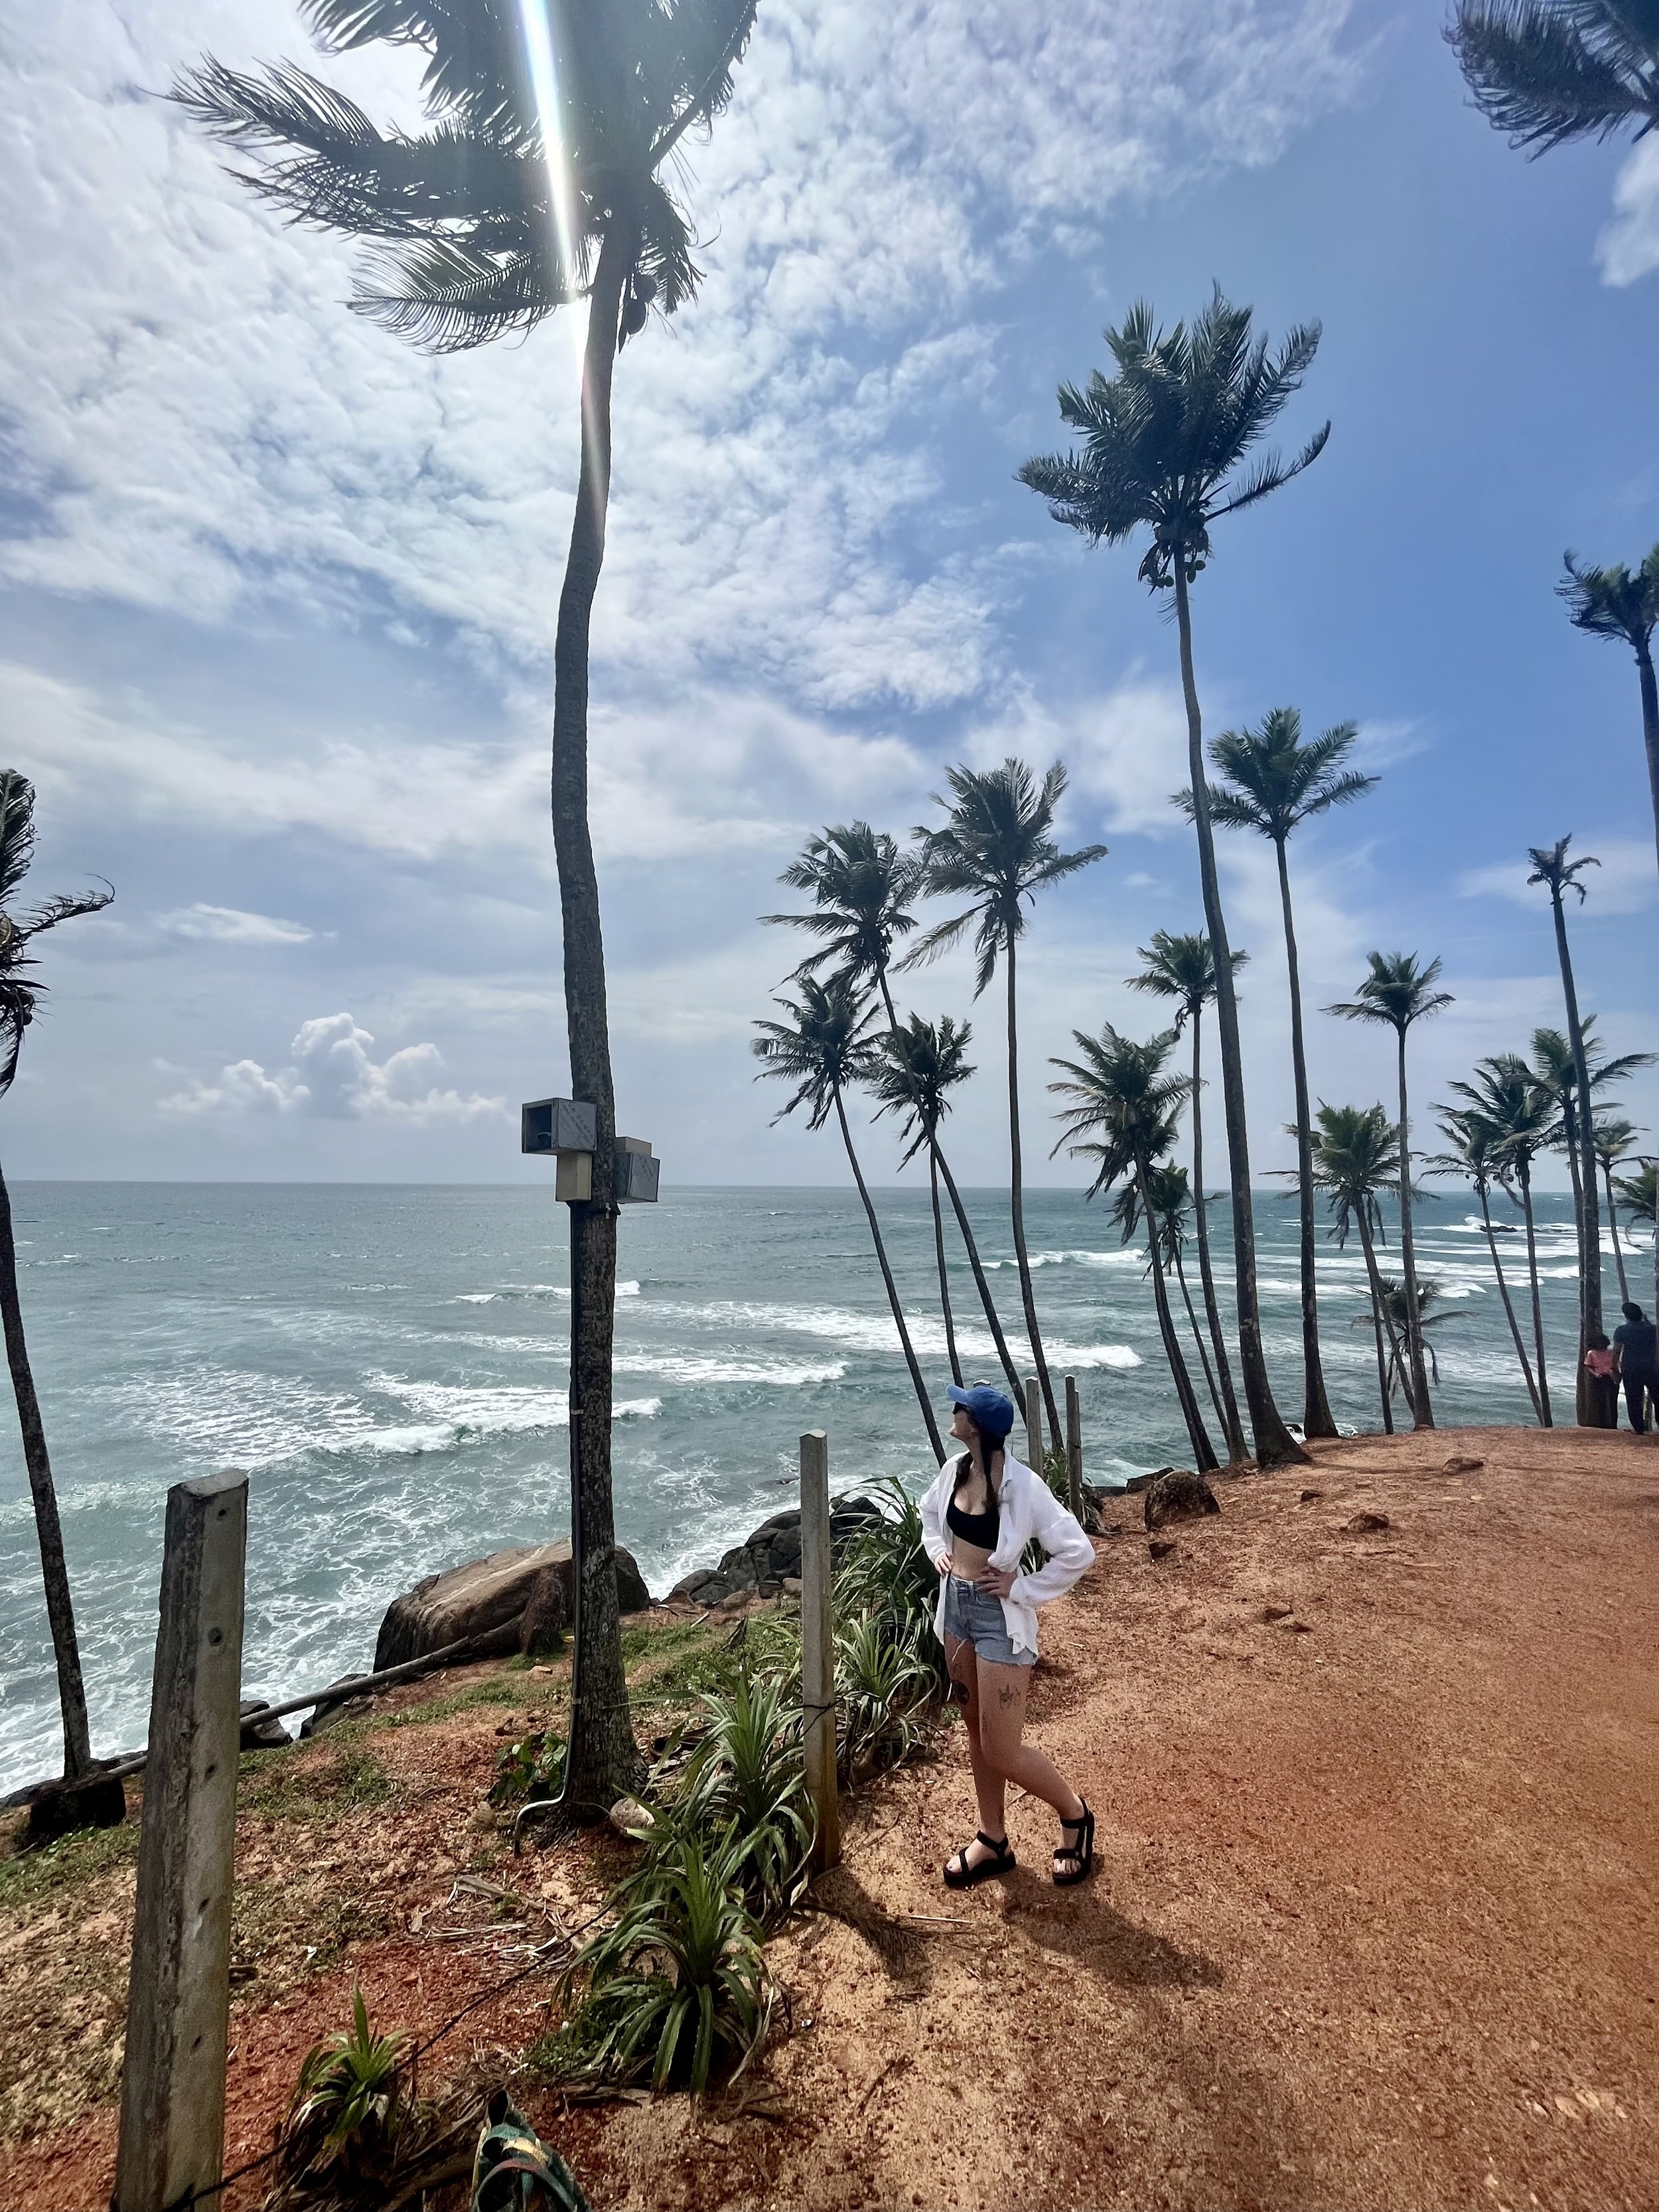 Kaija traveling with Greether in Sri Lanka